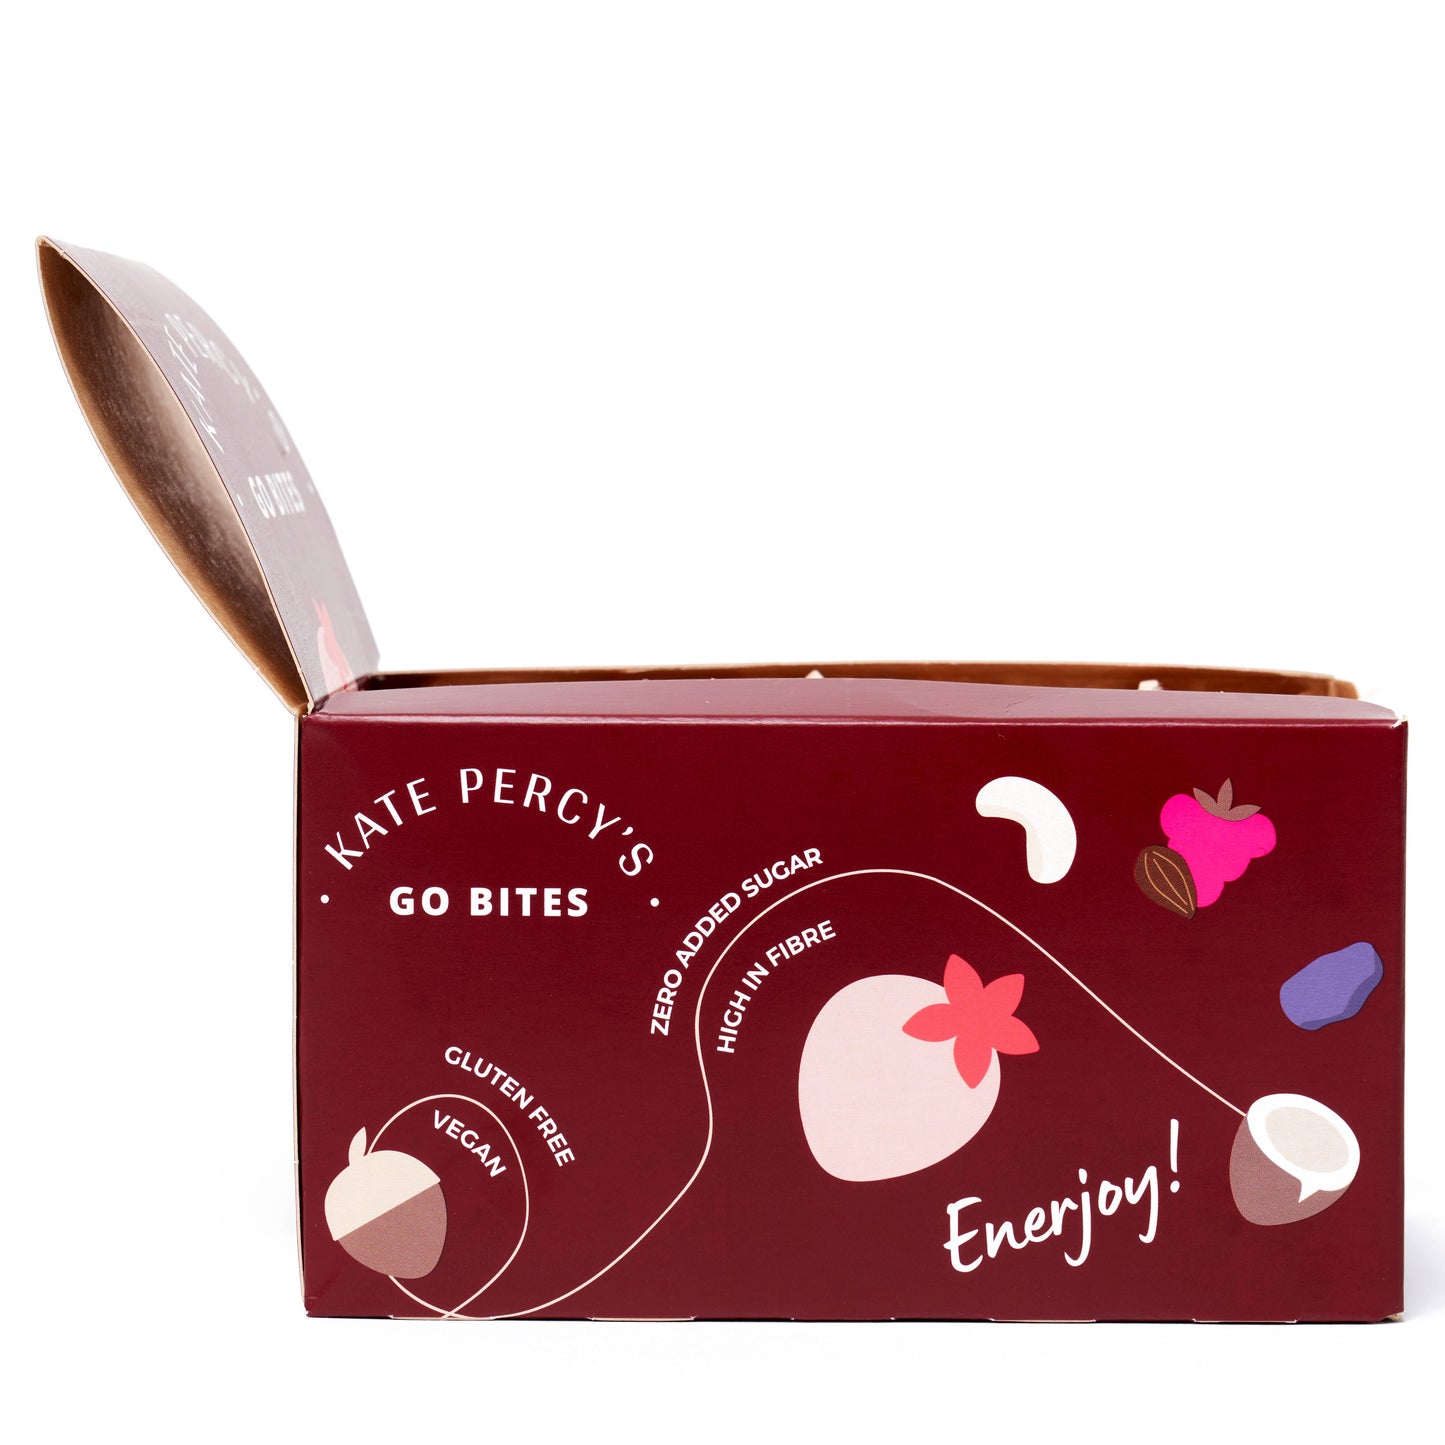 Kate Percy's Go Bites Raspberry & Cacao